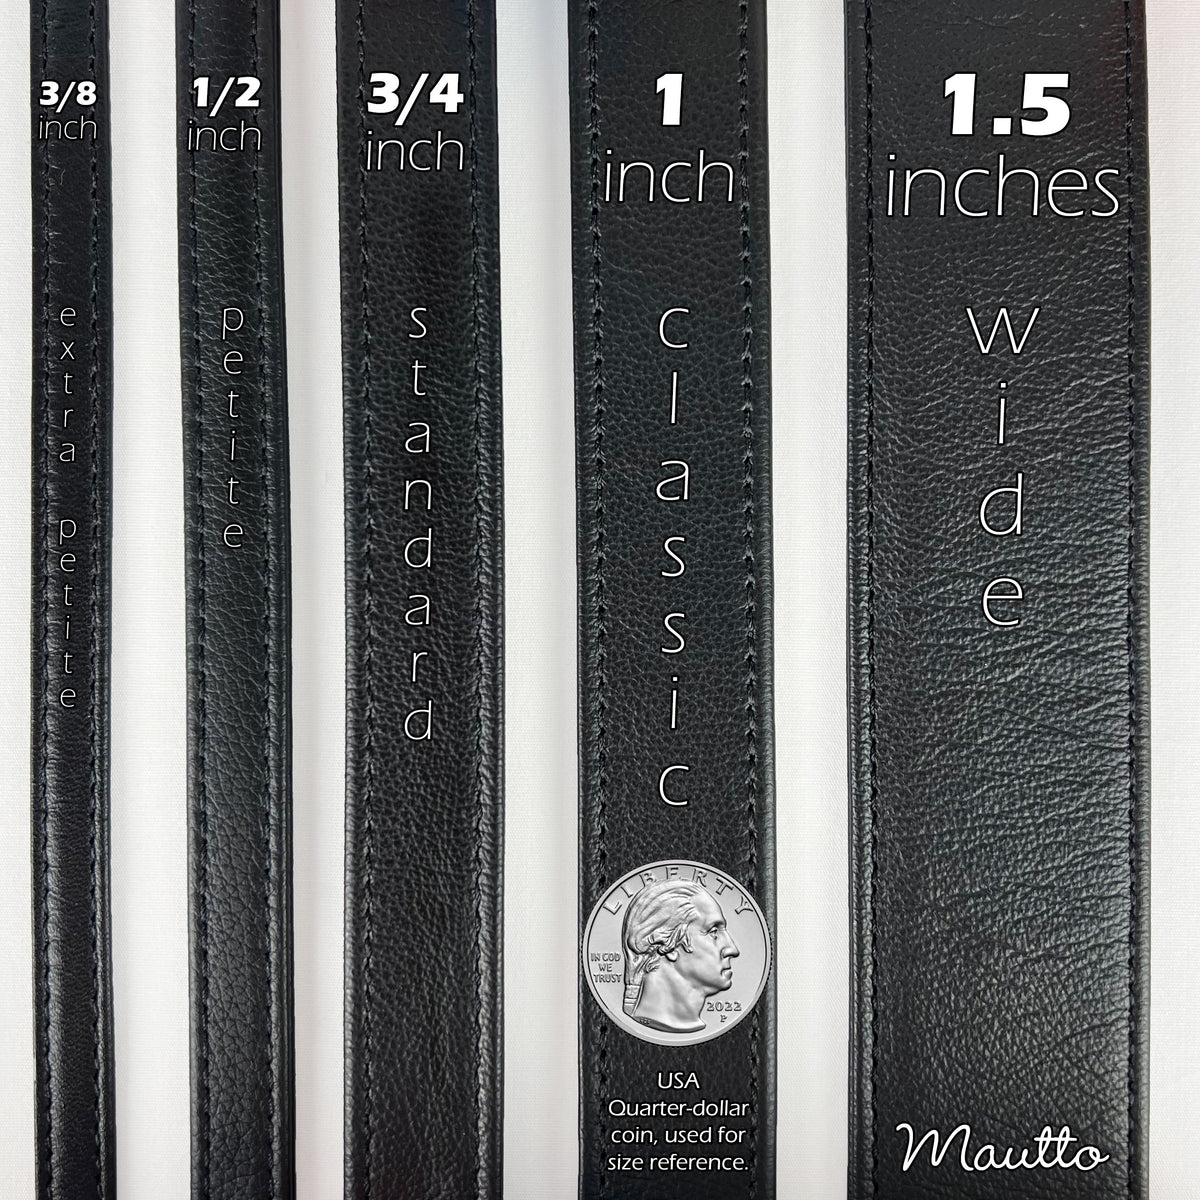 Mautto Black Leather Strap (13mm Petite Width) for LV Pochette, Alma, Eva Etc 20 Short Shoulder / Gold-Tone